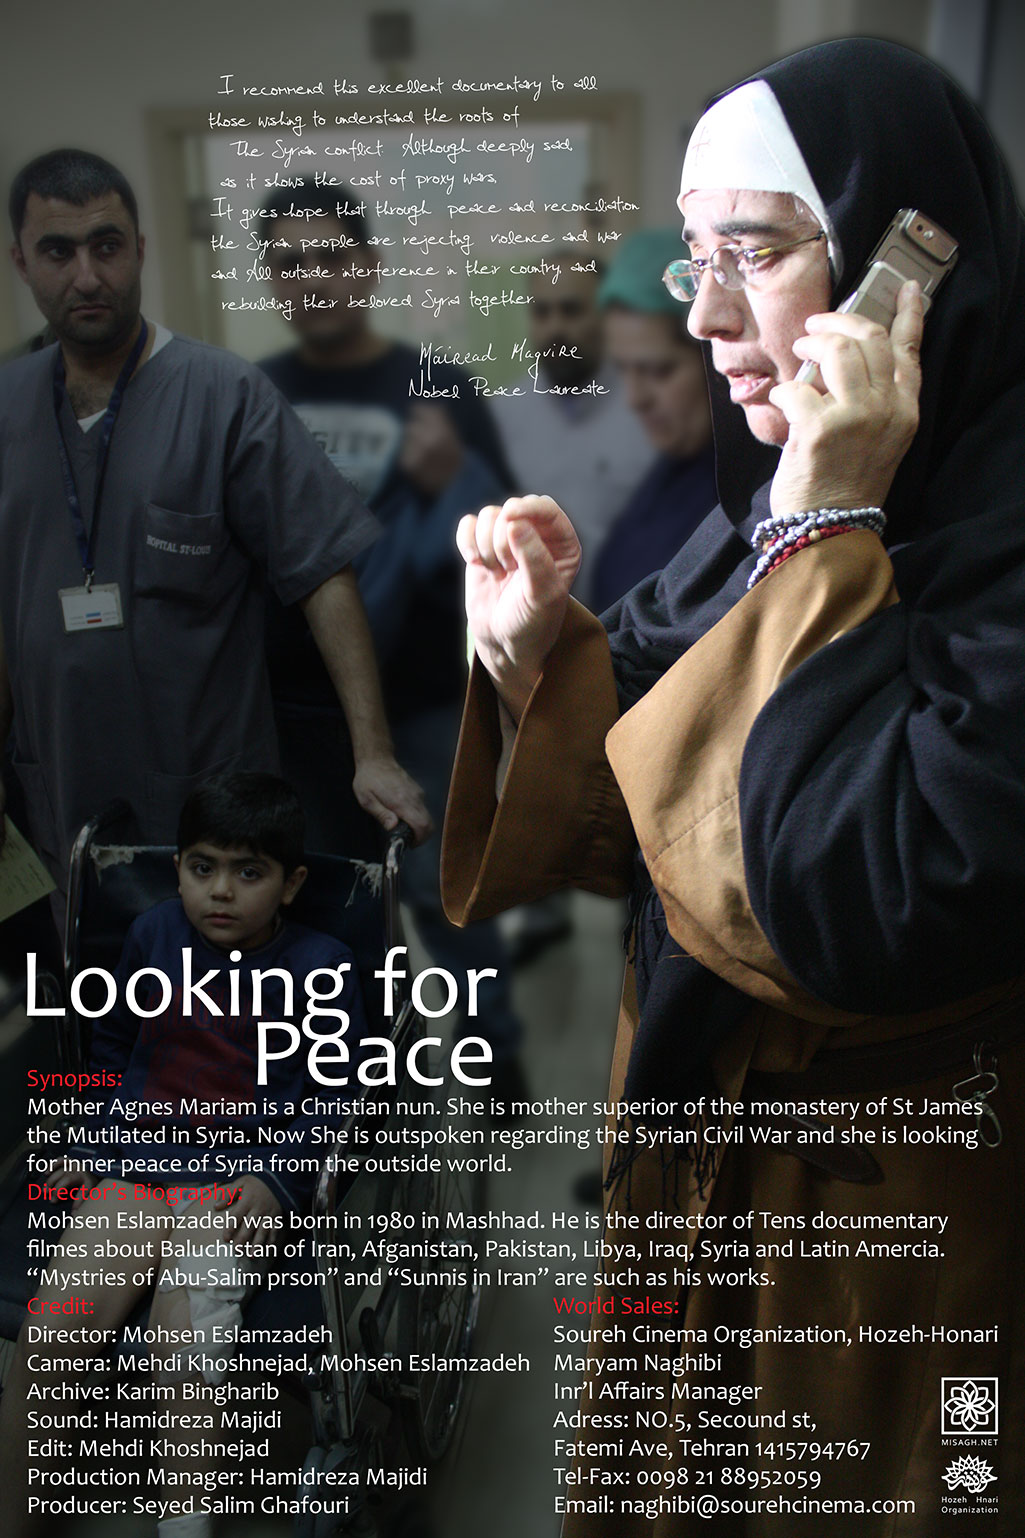 یادداشت مایرید ماگوایر درباره "به دنبال صلح" | Mairead Maguire's note about Looking for Peace